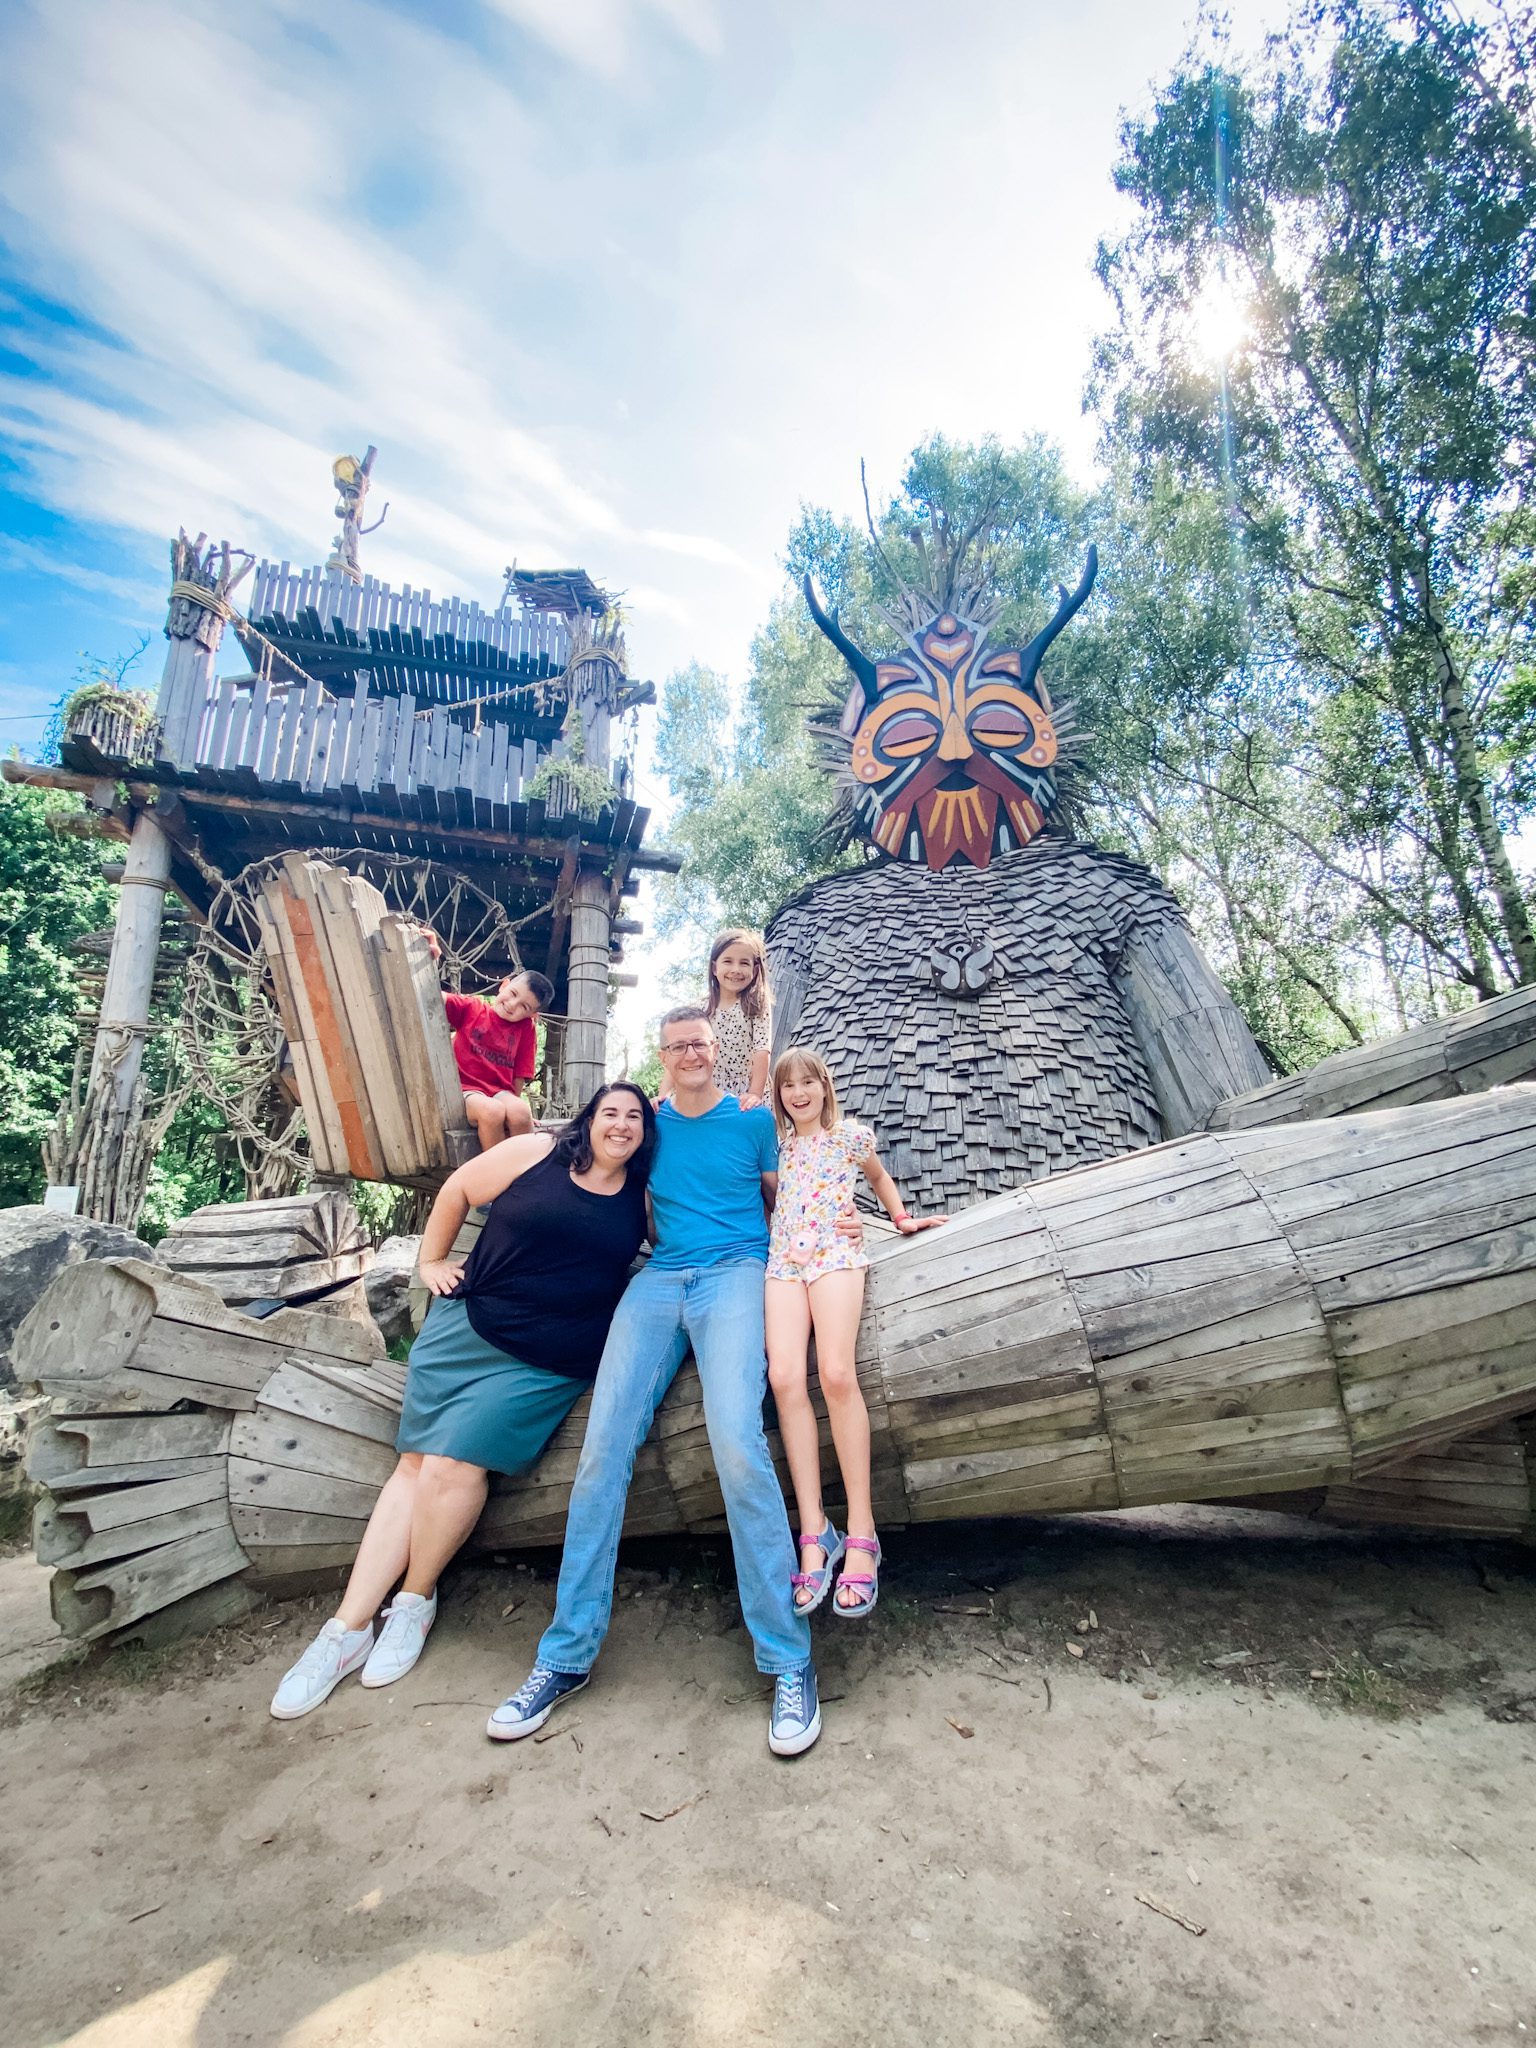 Visit the trolls park in Belgium for family fun